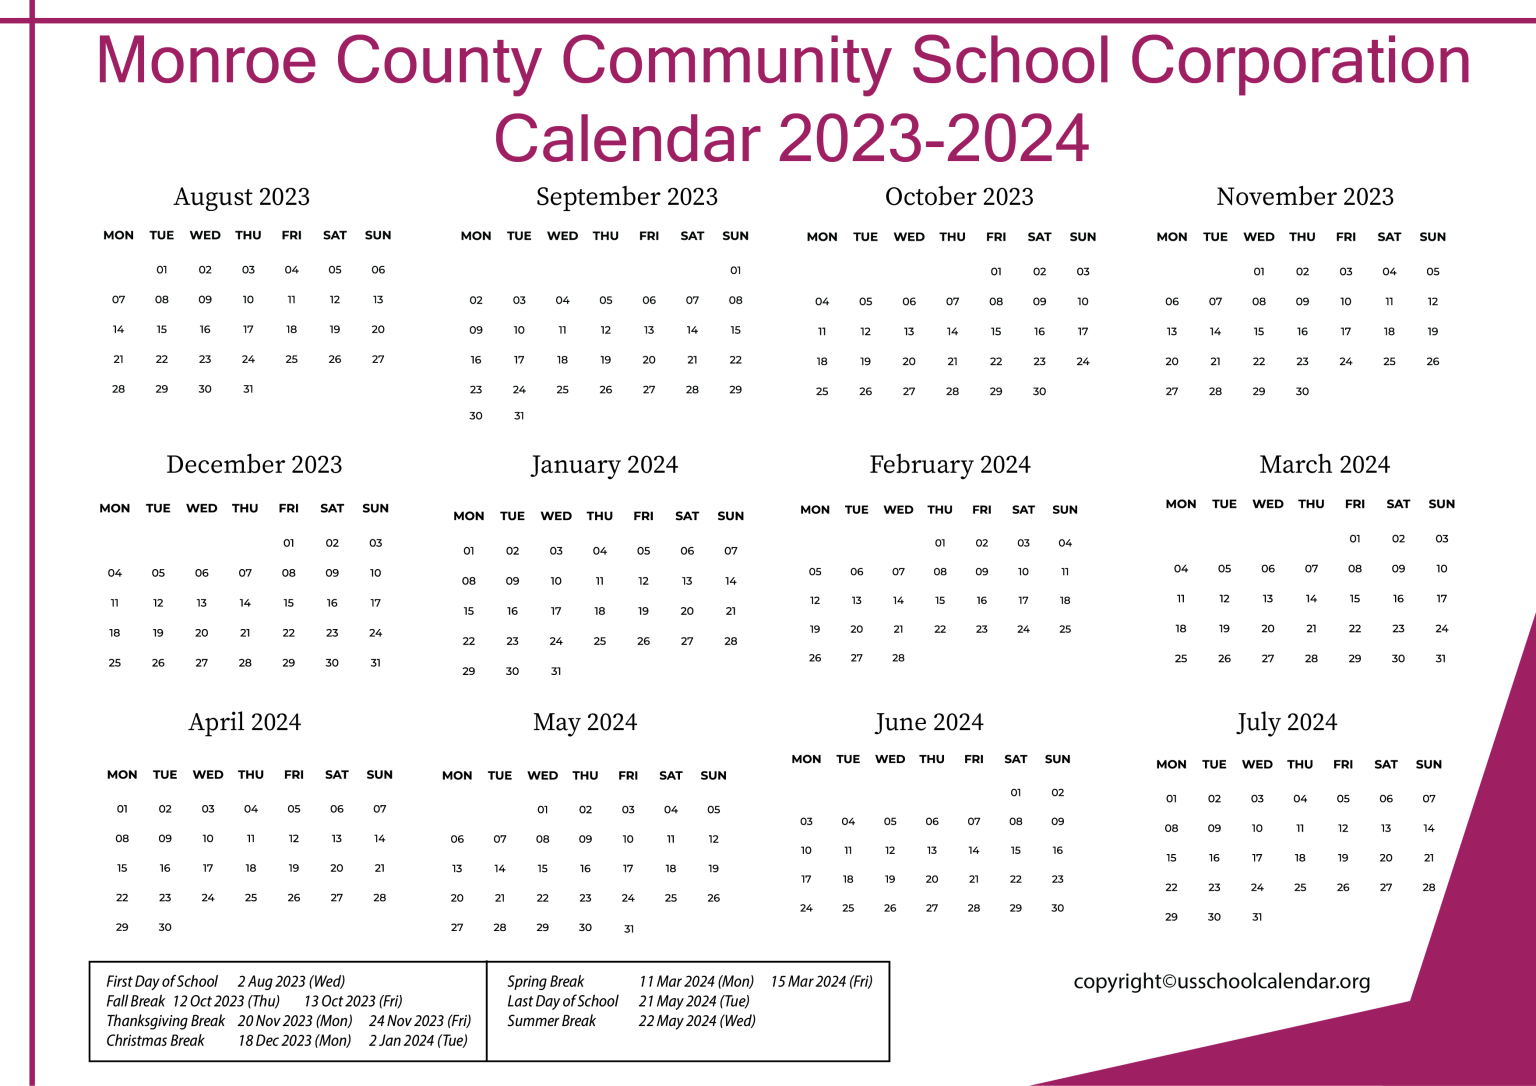 MCCSC Calendar - US School Calendar